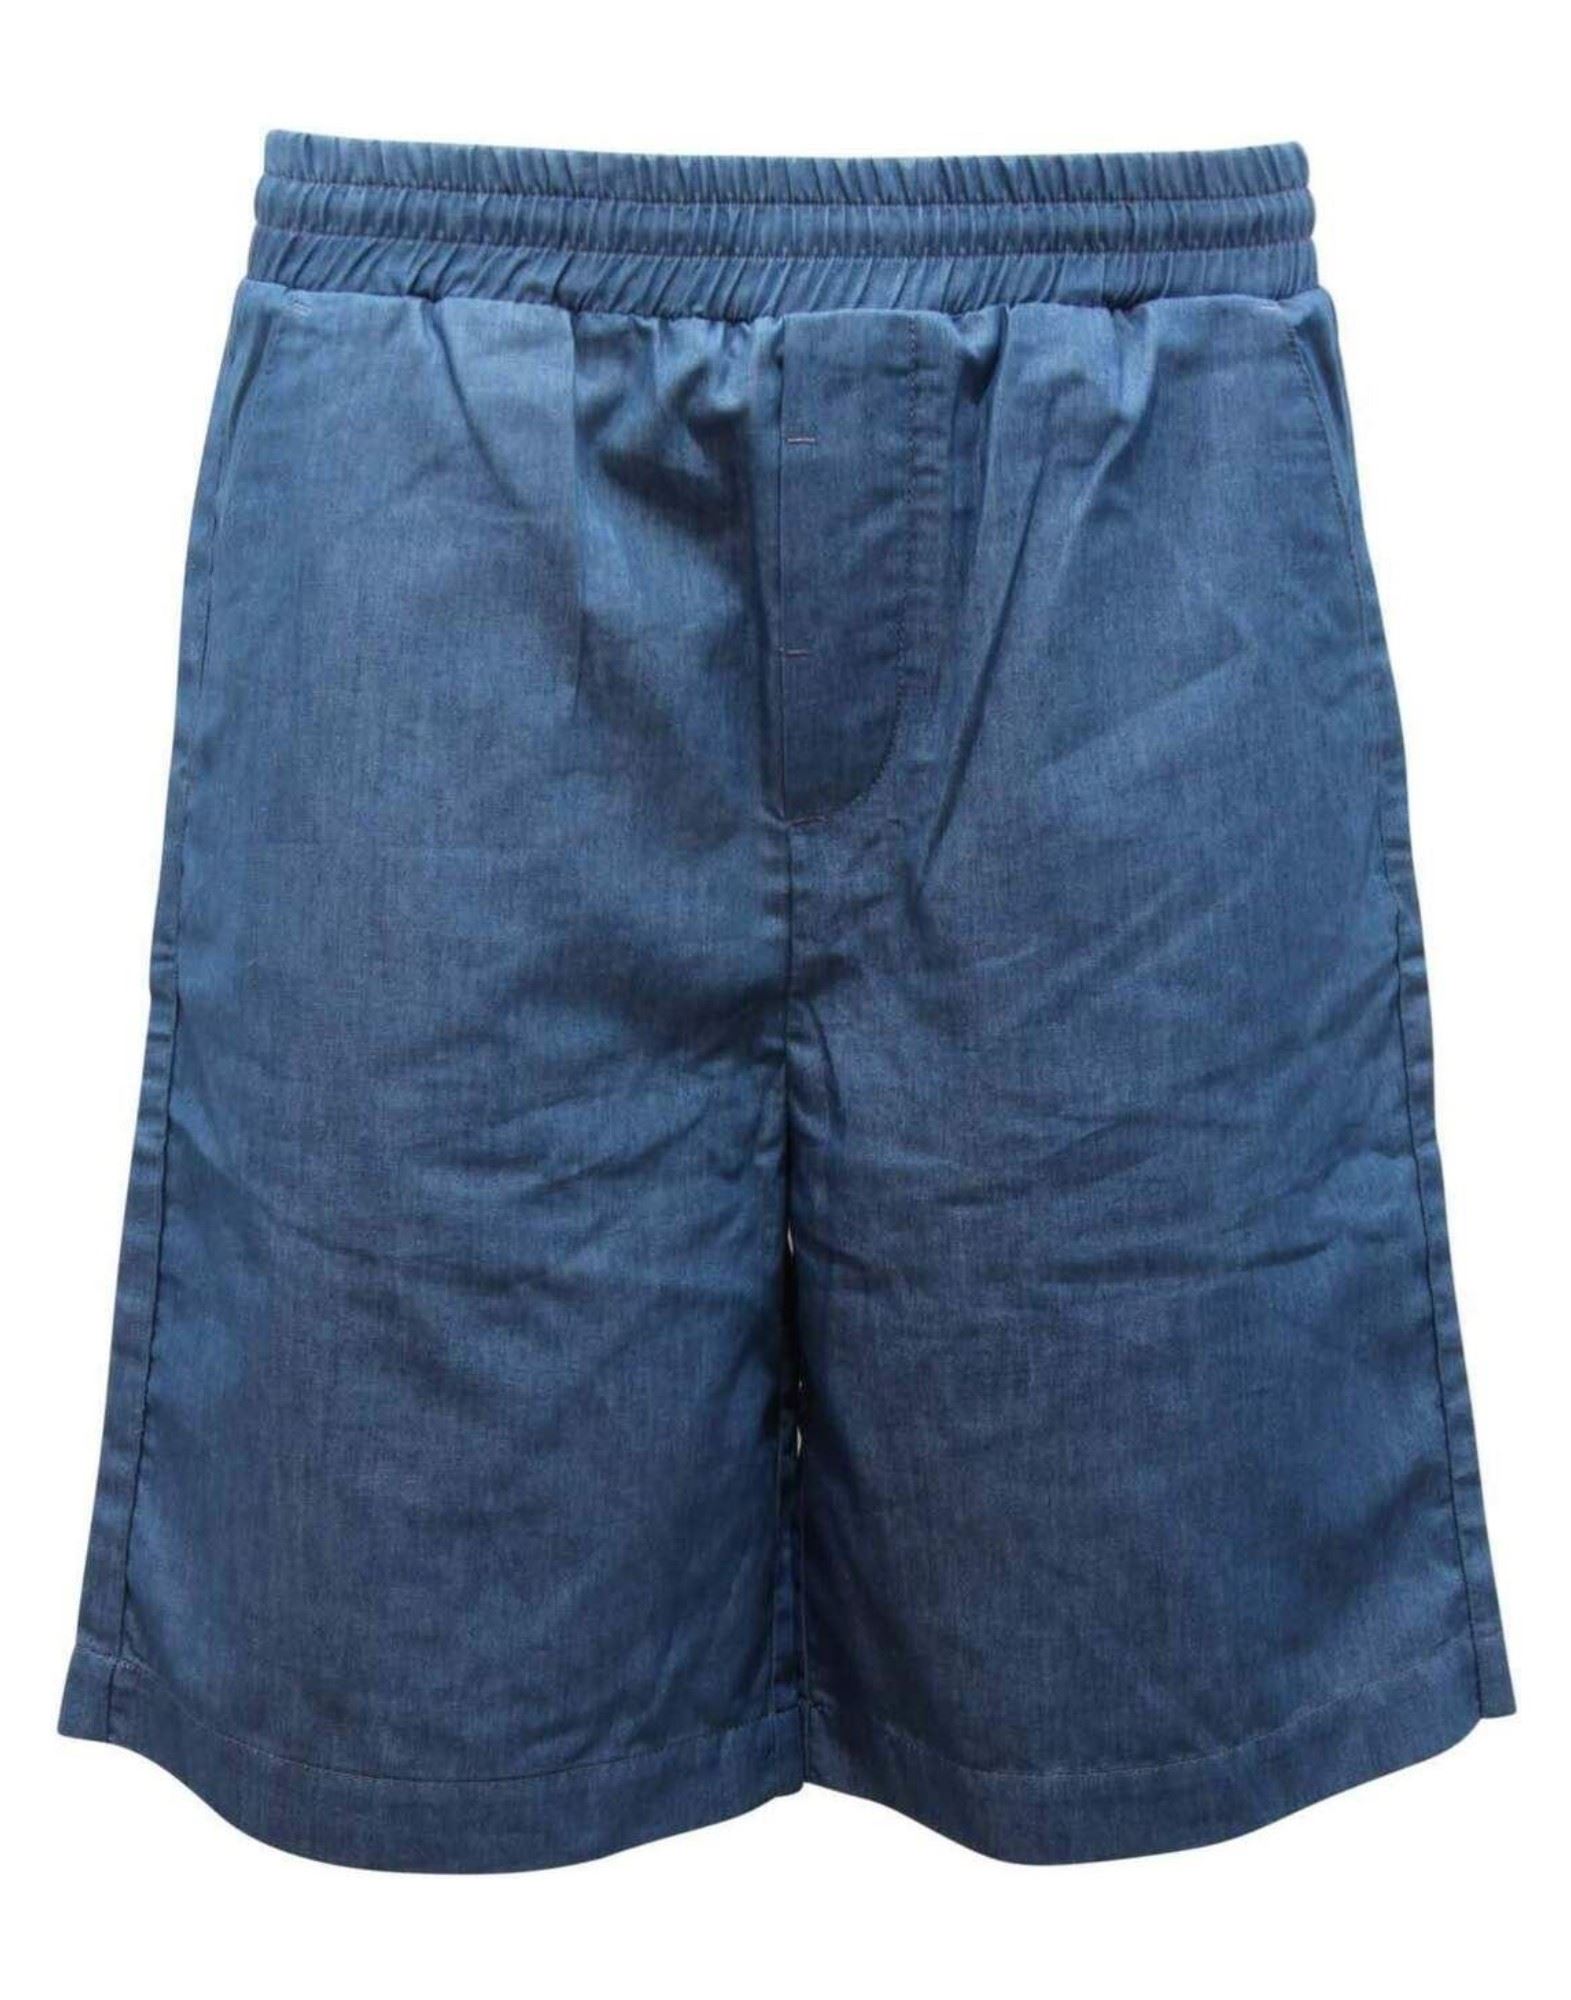 CHOICE Shorts & Bermudashorts Herren Blau von CHOICE